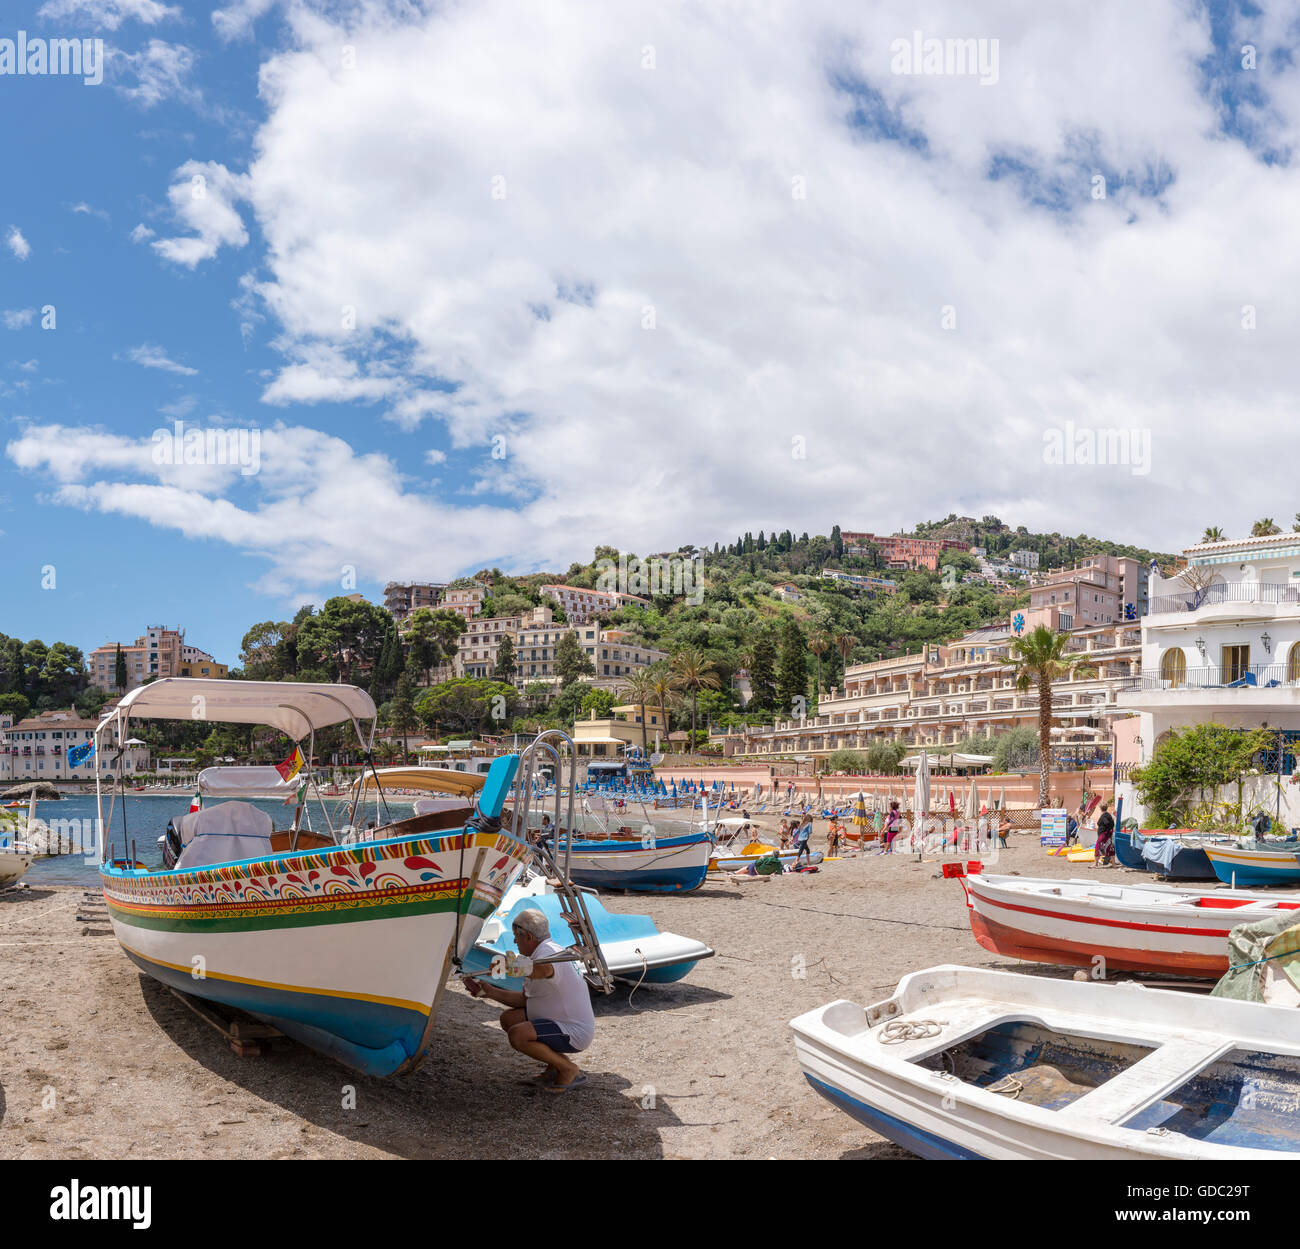 Hotels,beach with fishing boats at the bay of Mazzaro Stock Photo